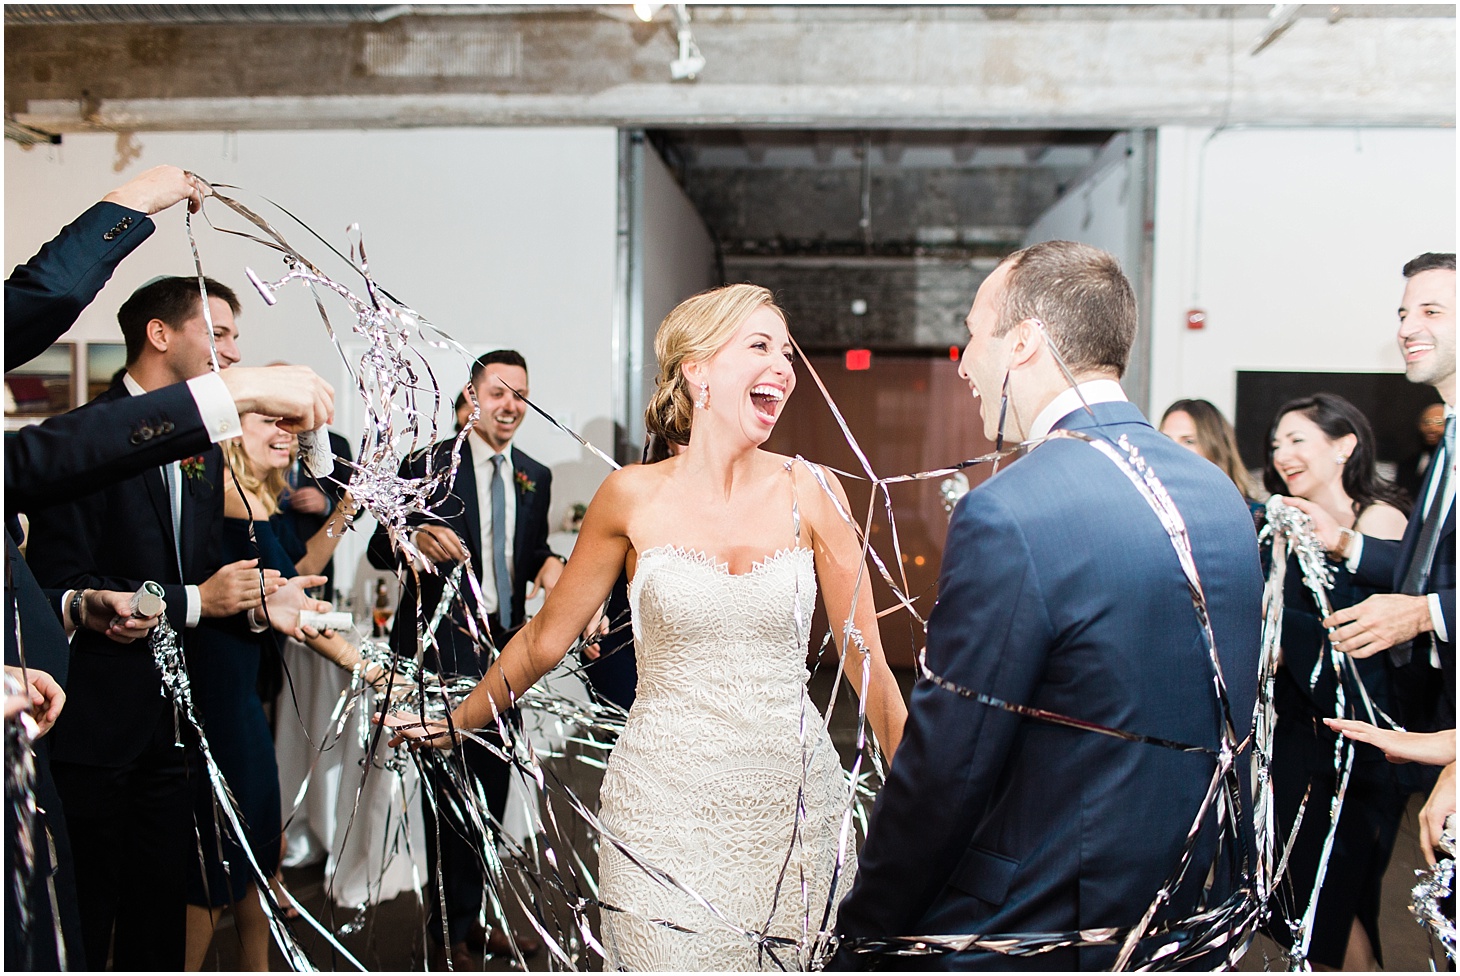 Jewish Wedding Reception at Long View Gallery, Industrial-Chic Wedding in DC, Sarah Bradshaw Photography, DC Wedding Photographer